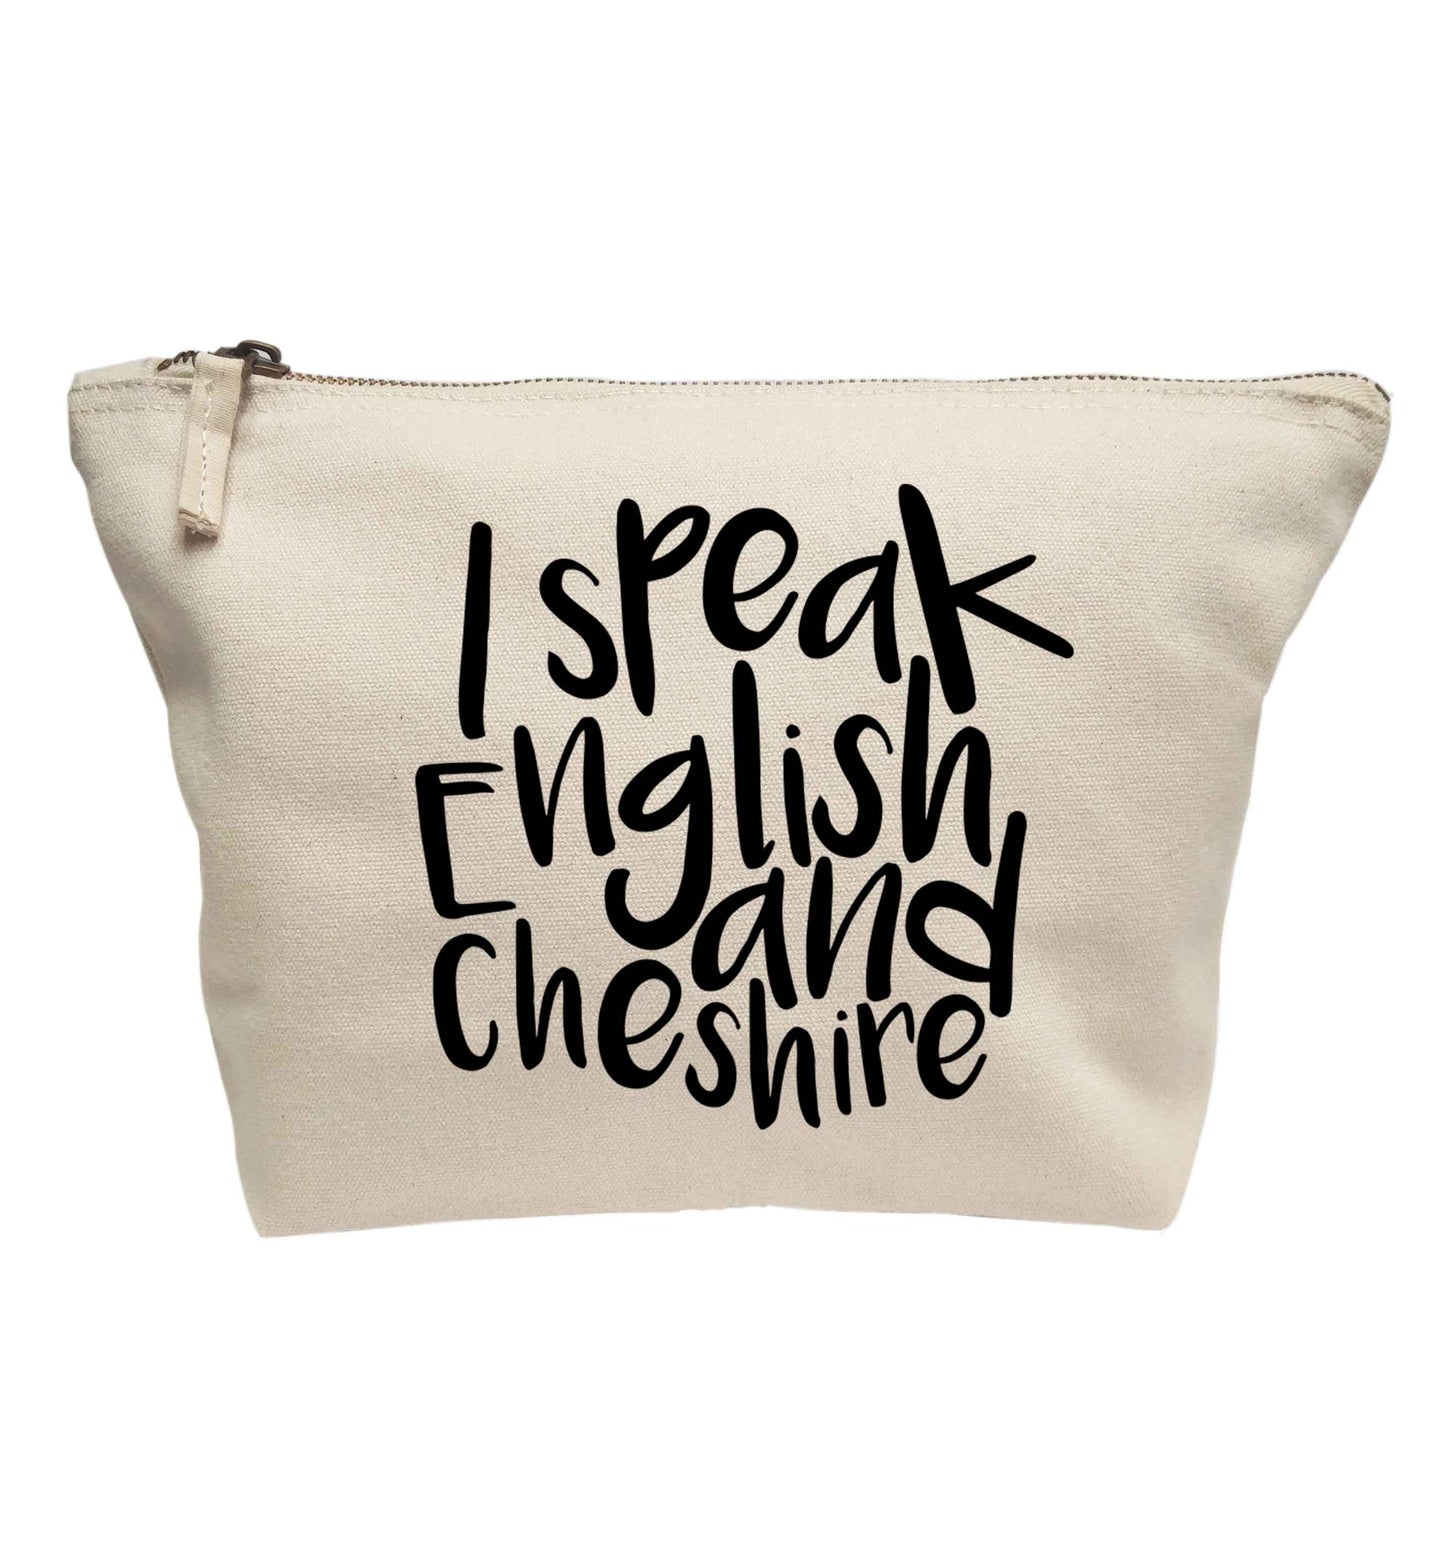 I speak English and Cheshire | makeup / wash bag